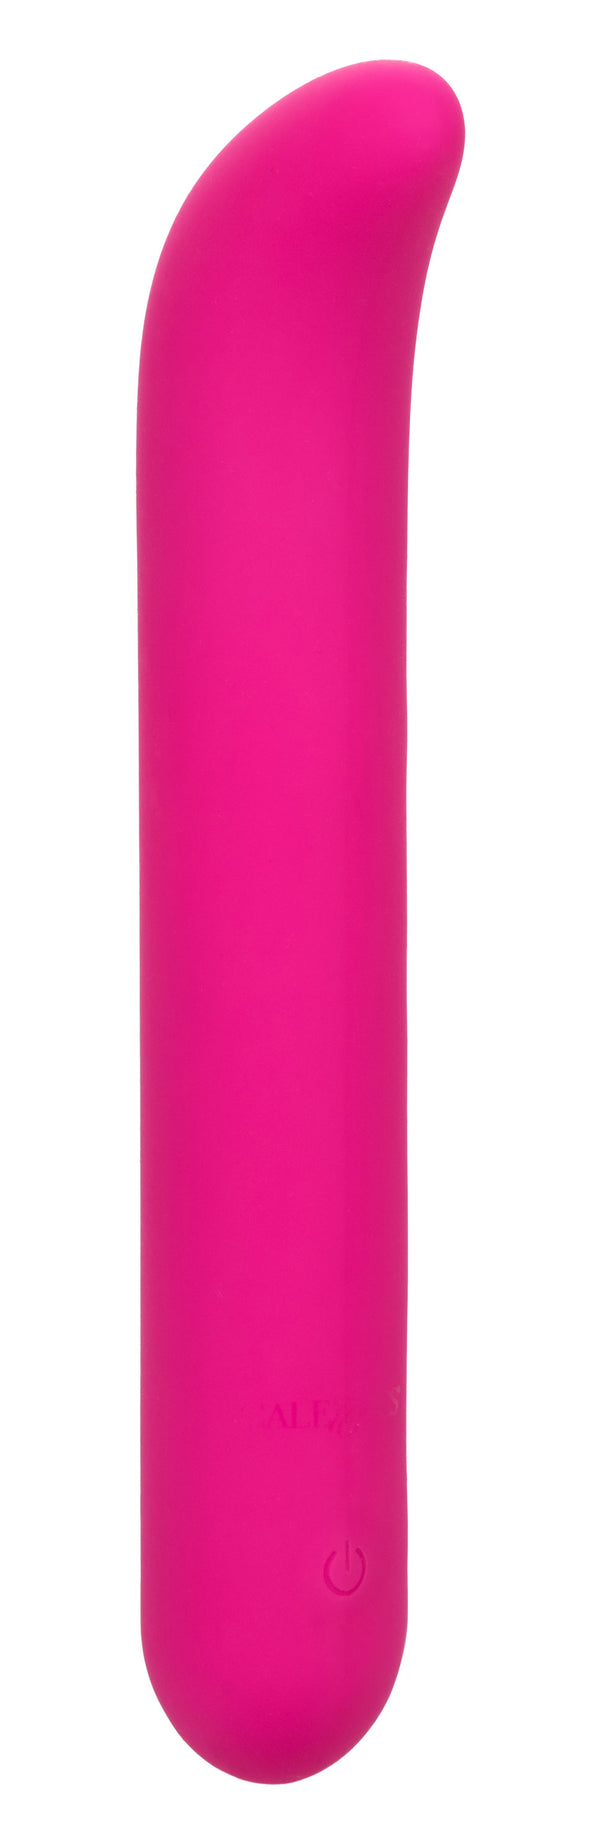 Bliss Liquid Silicone G Vibe - Pink-Vibrators-CalExotics-Andy's Adult World